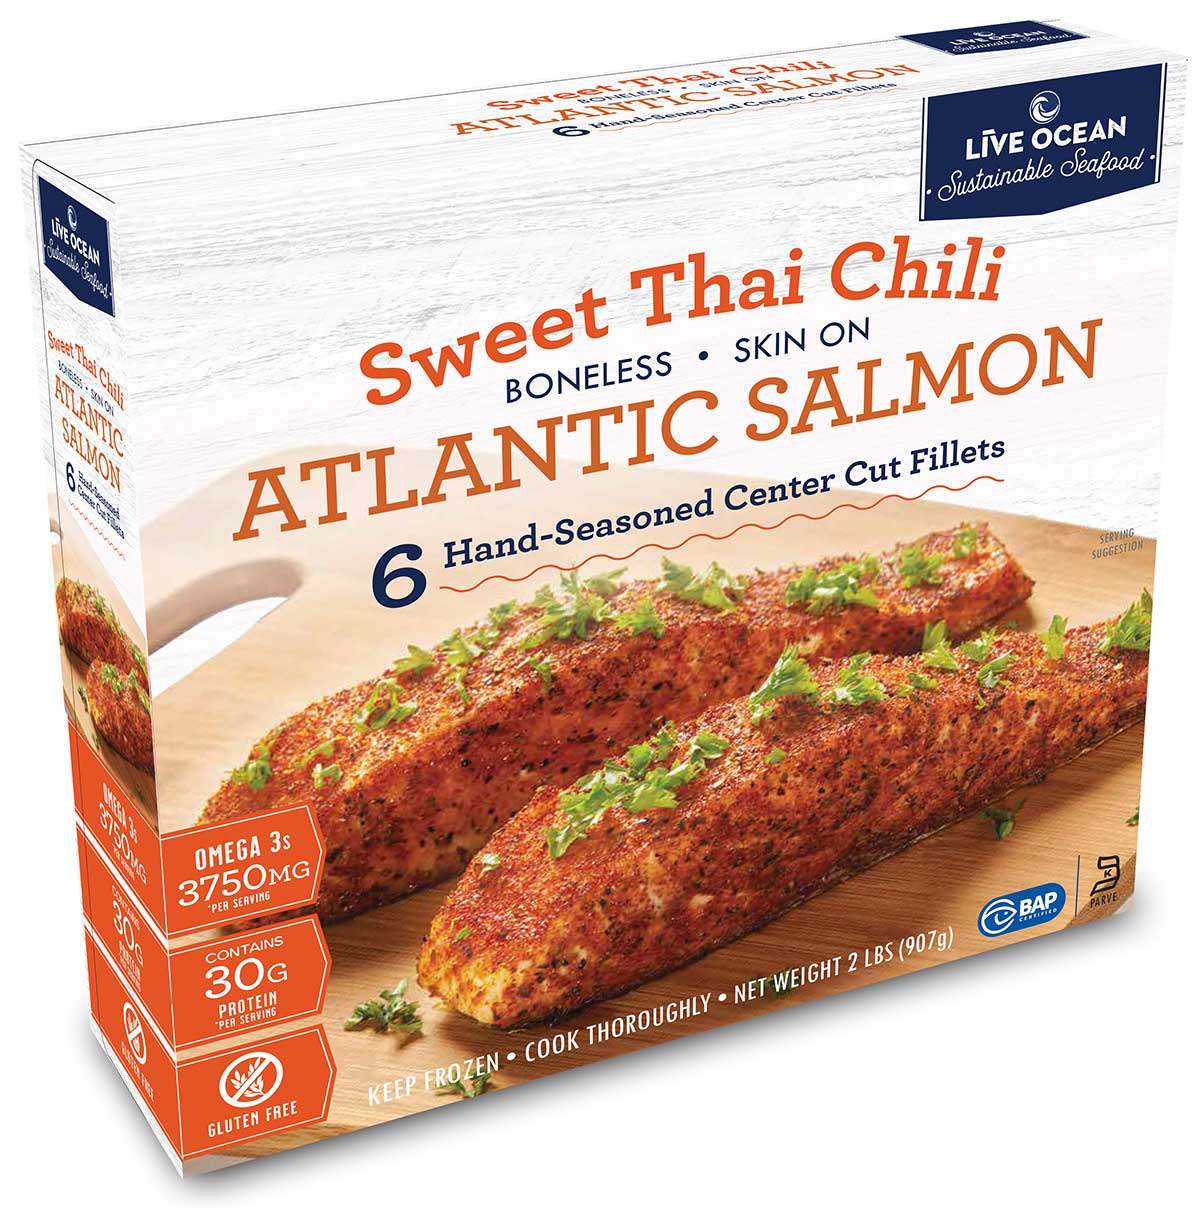 Live Ocean Sweet Thai Chili Salmon